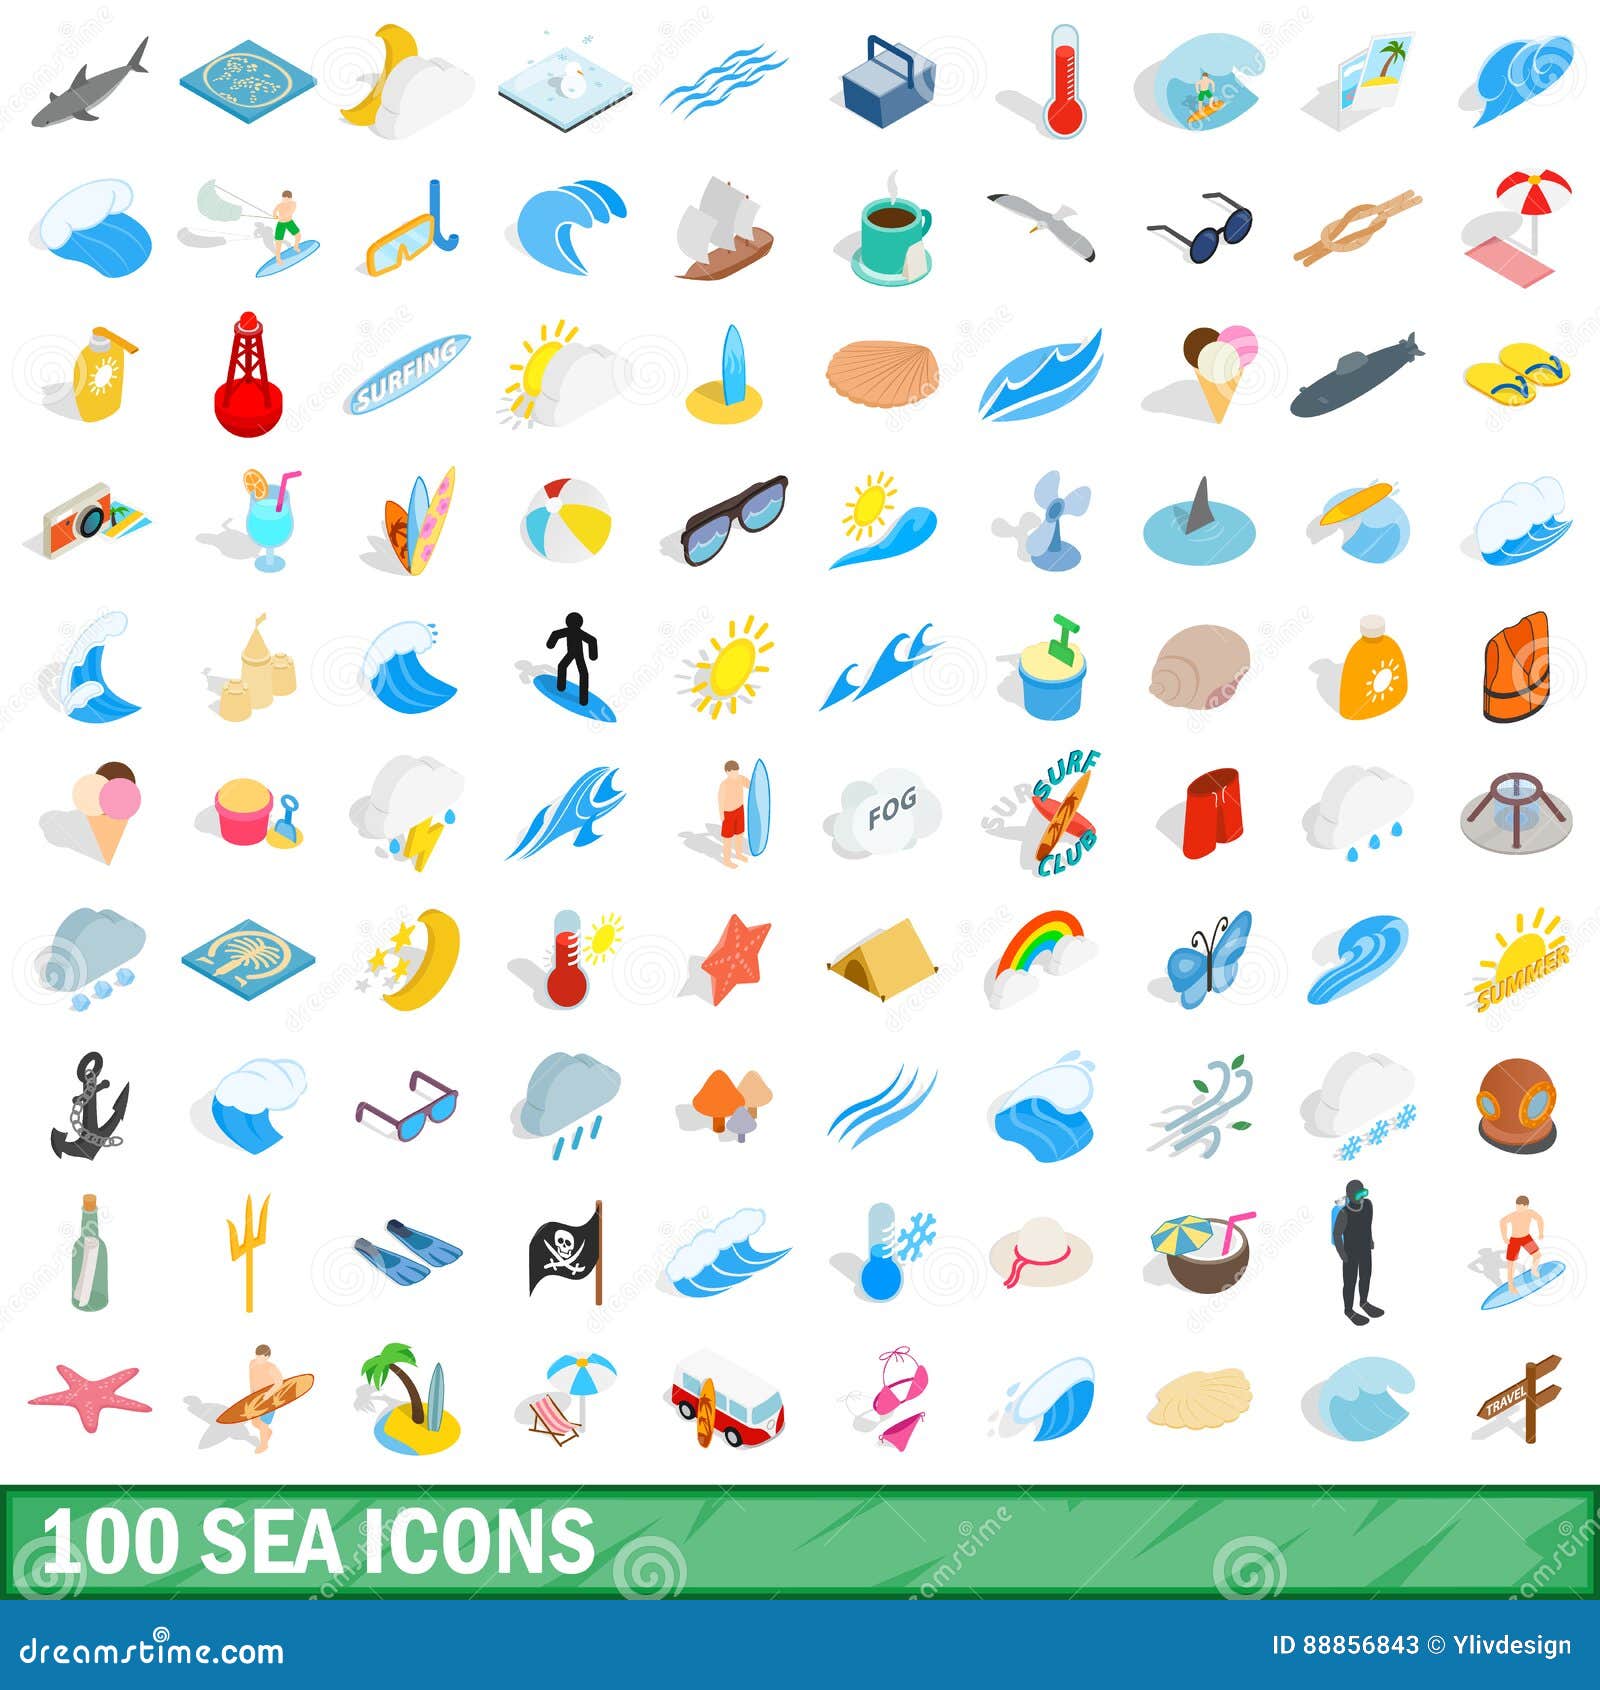 100 sea icons set, isometric 3d style